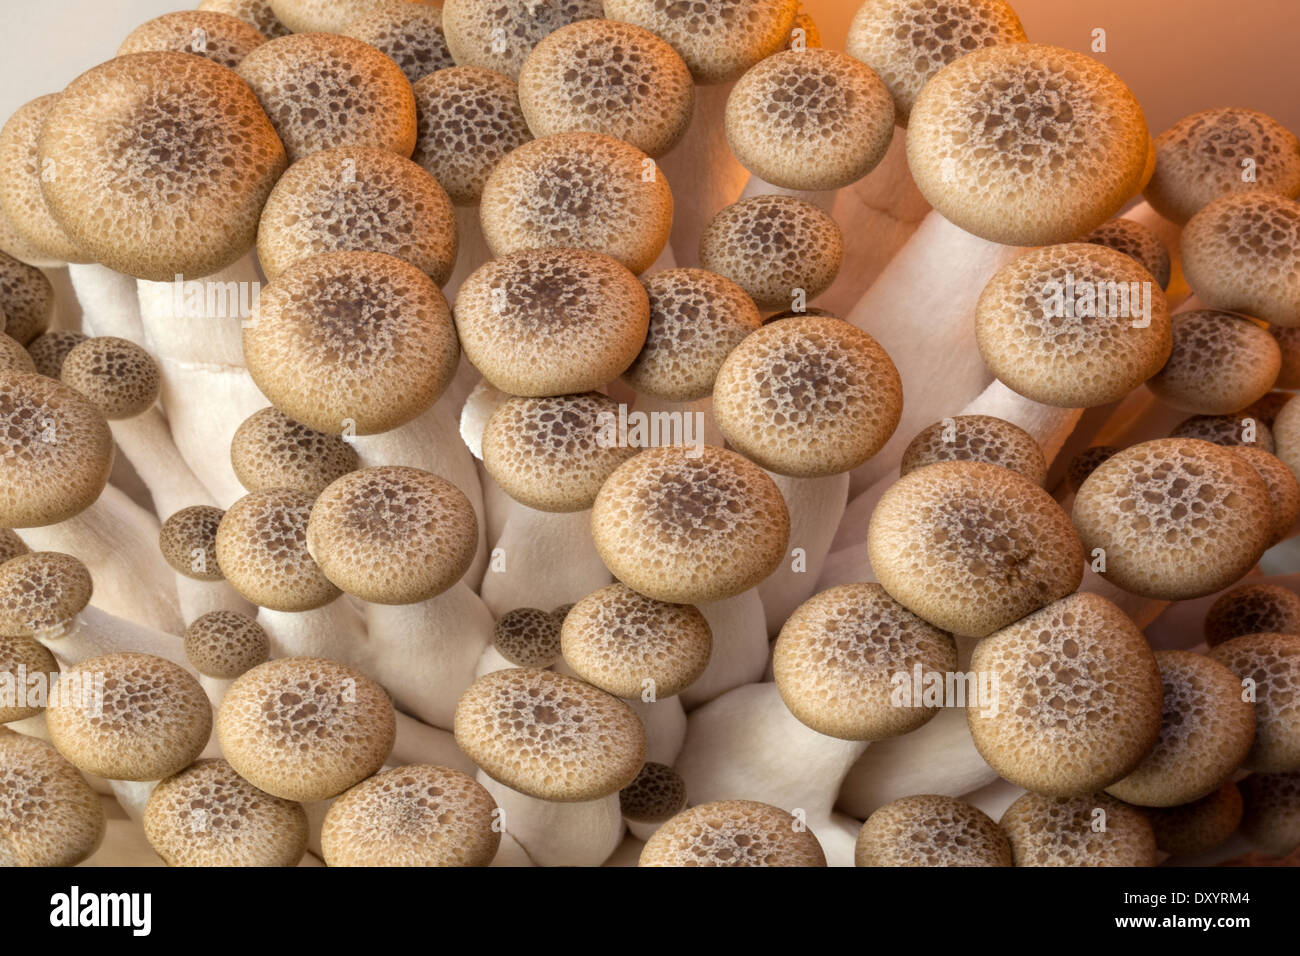 Buna Shimeji are edible mushrooms native to eastern Asia, especially Japan. Stock Photo